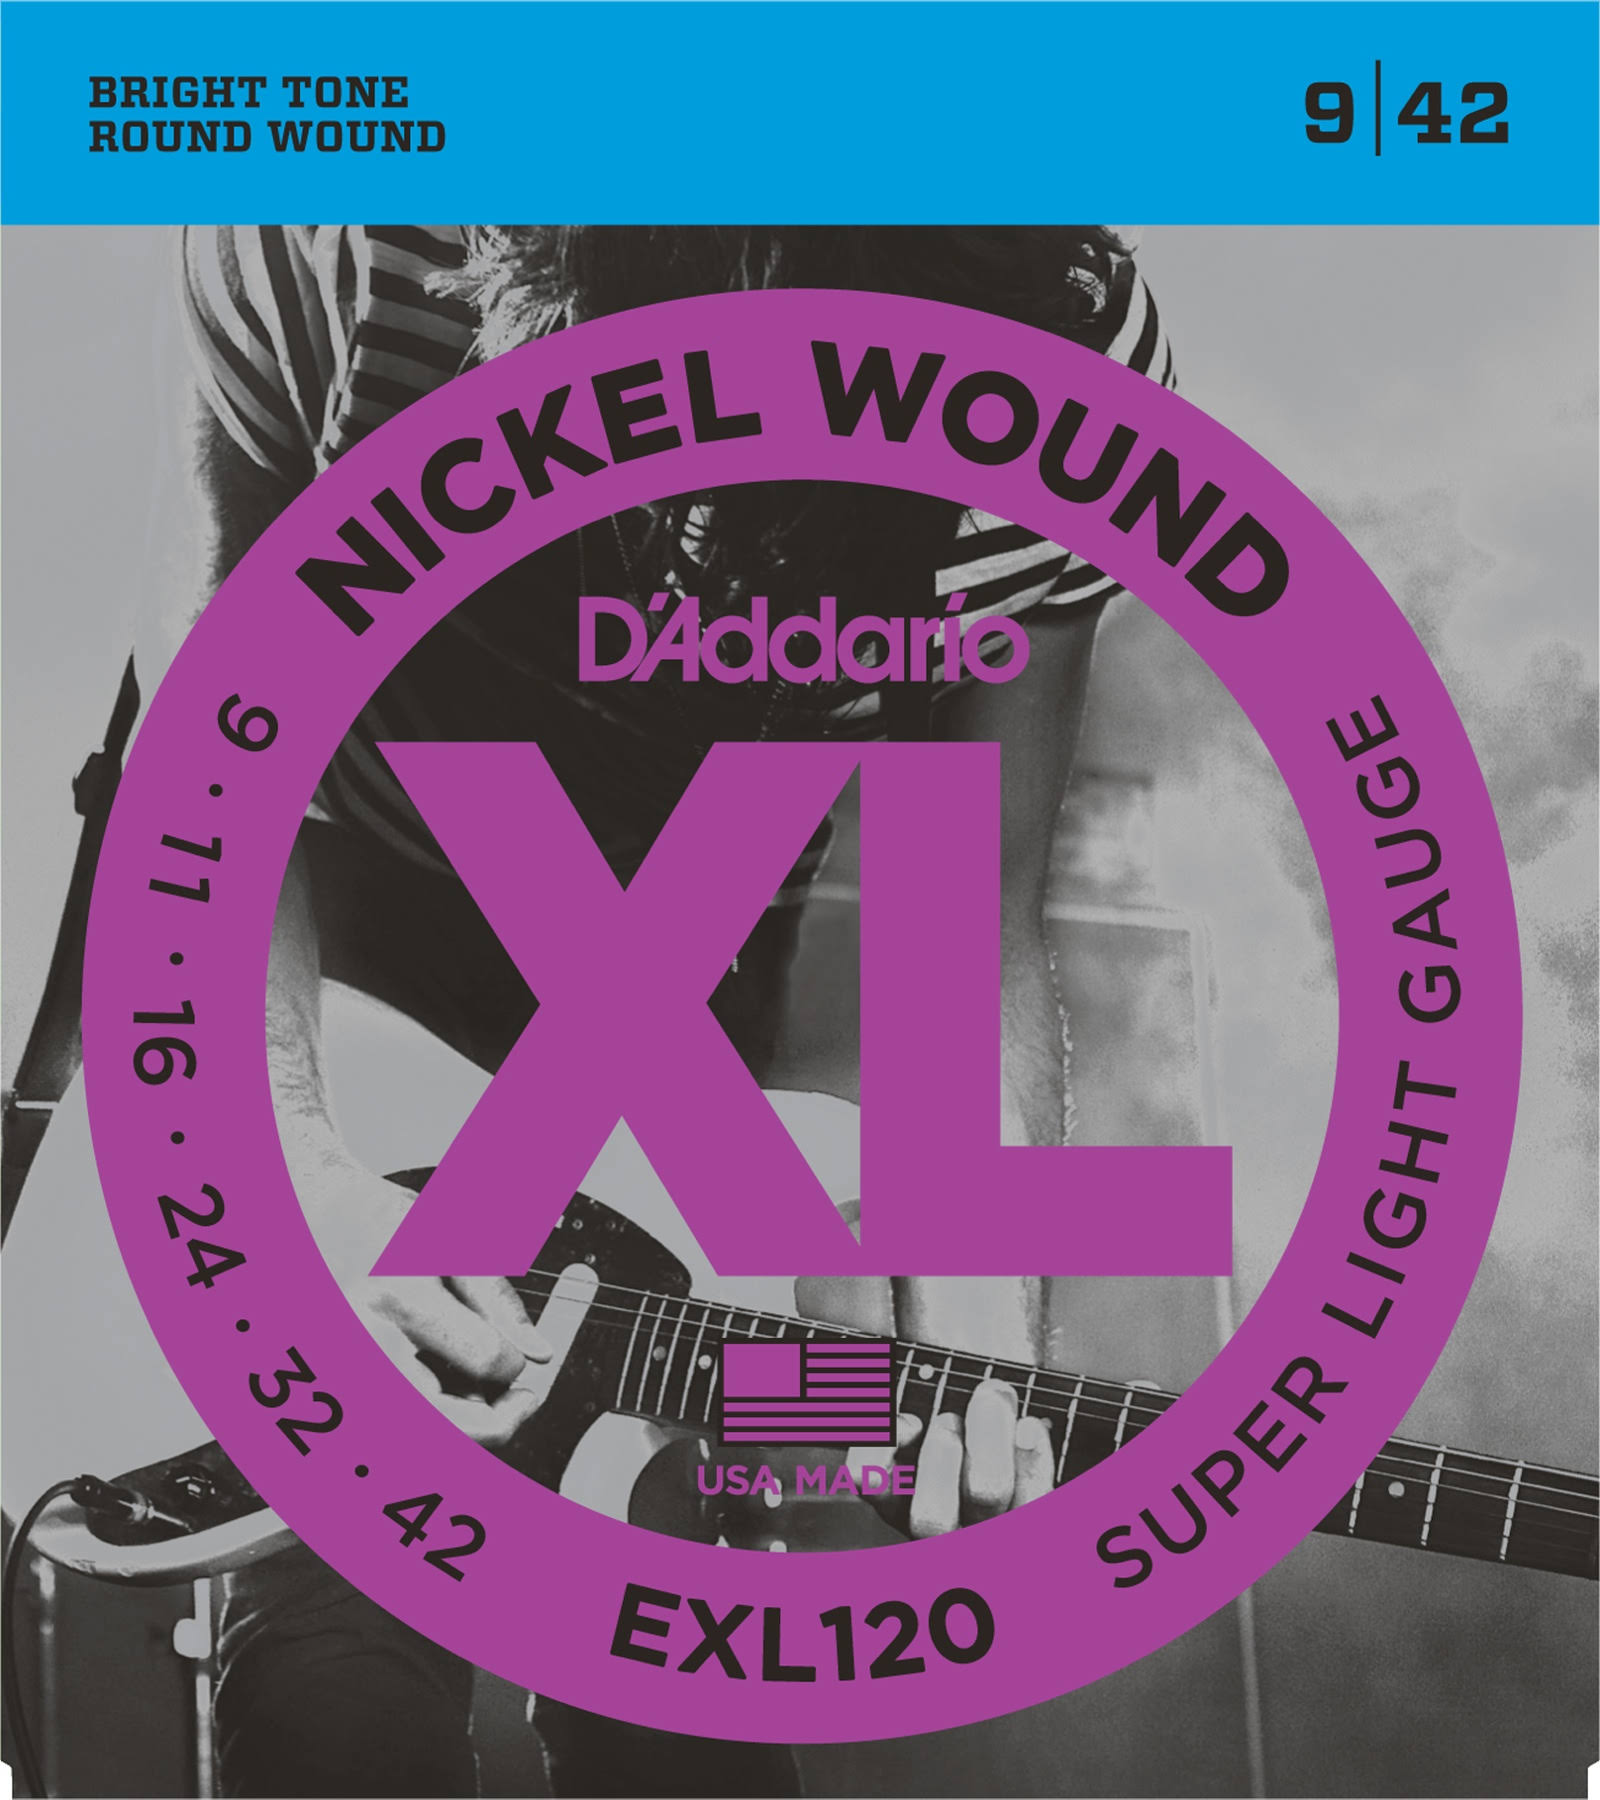 D'Addario EXL120 Nickel Wound Electric Guitar Strings - Super Light, 9-42